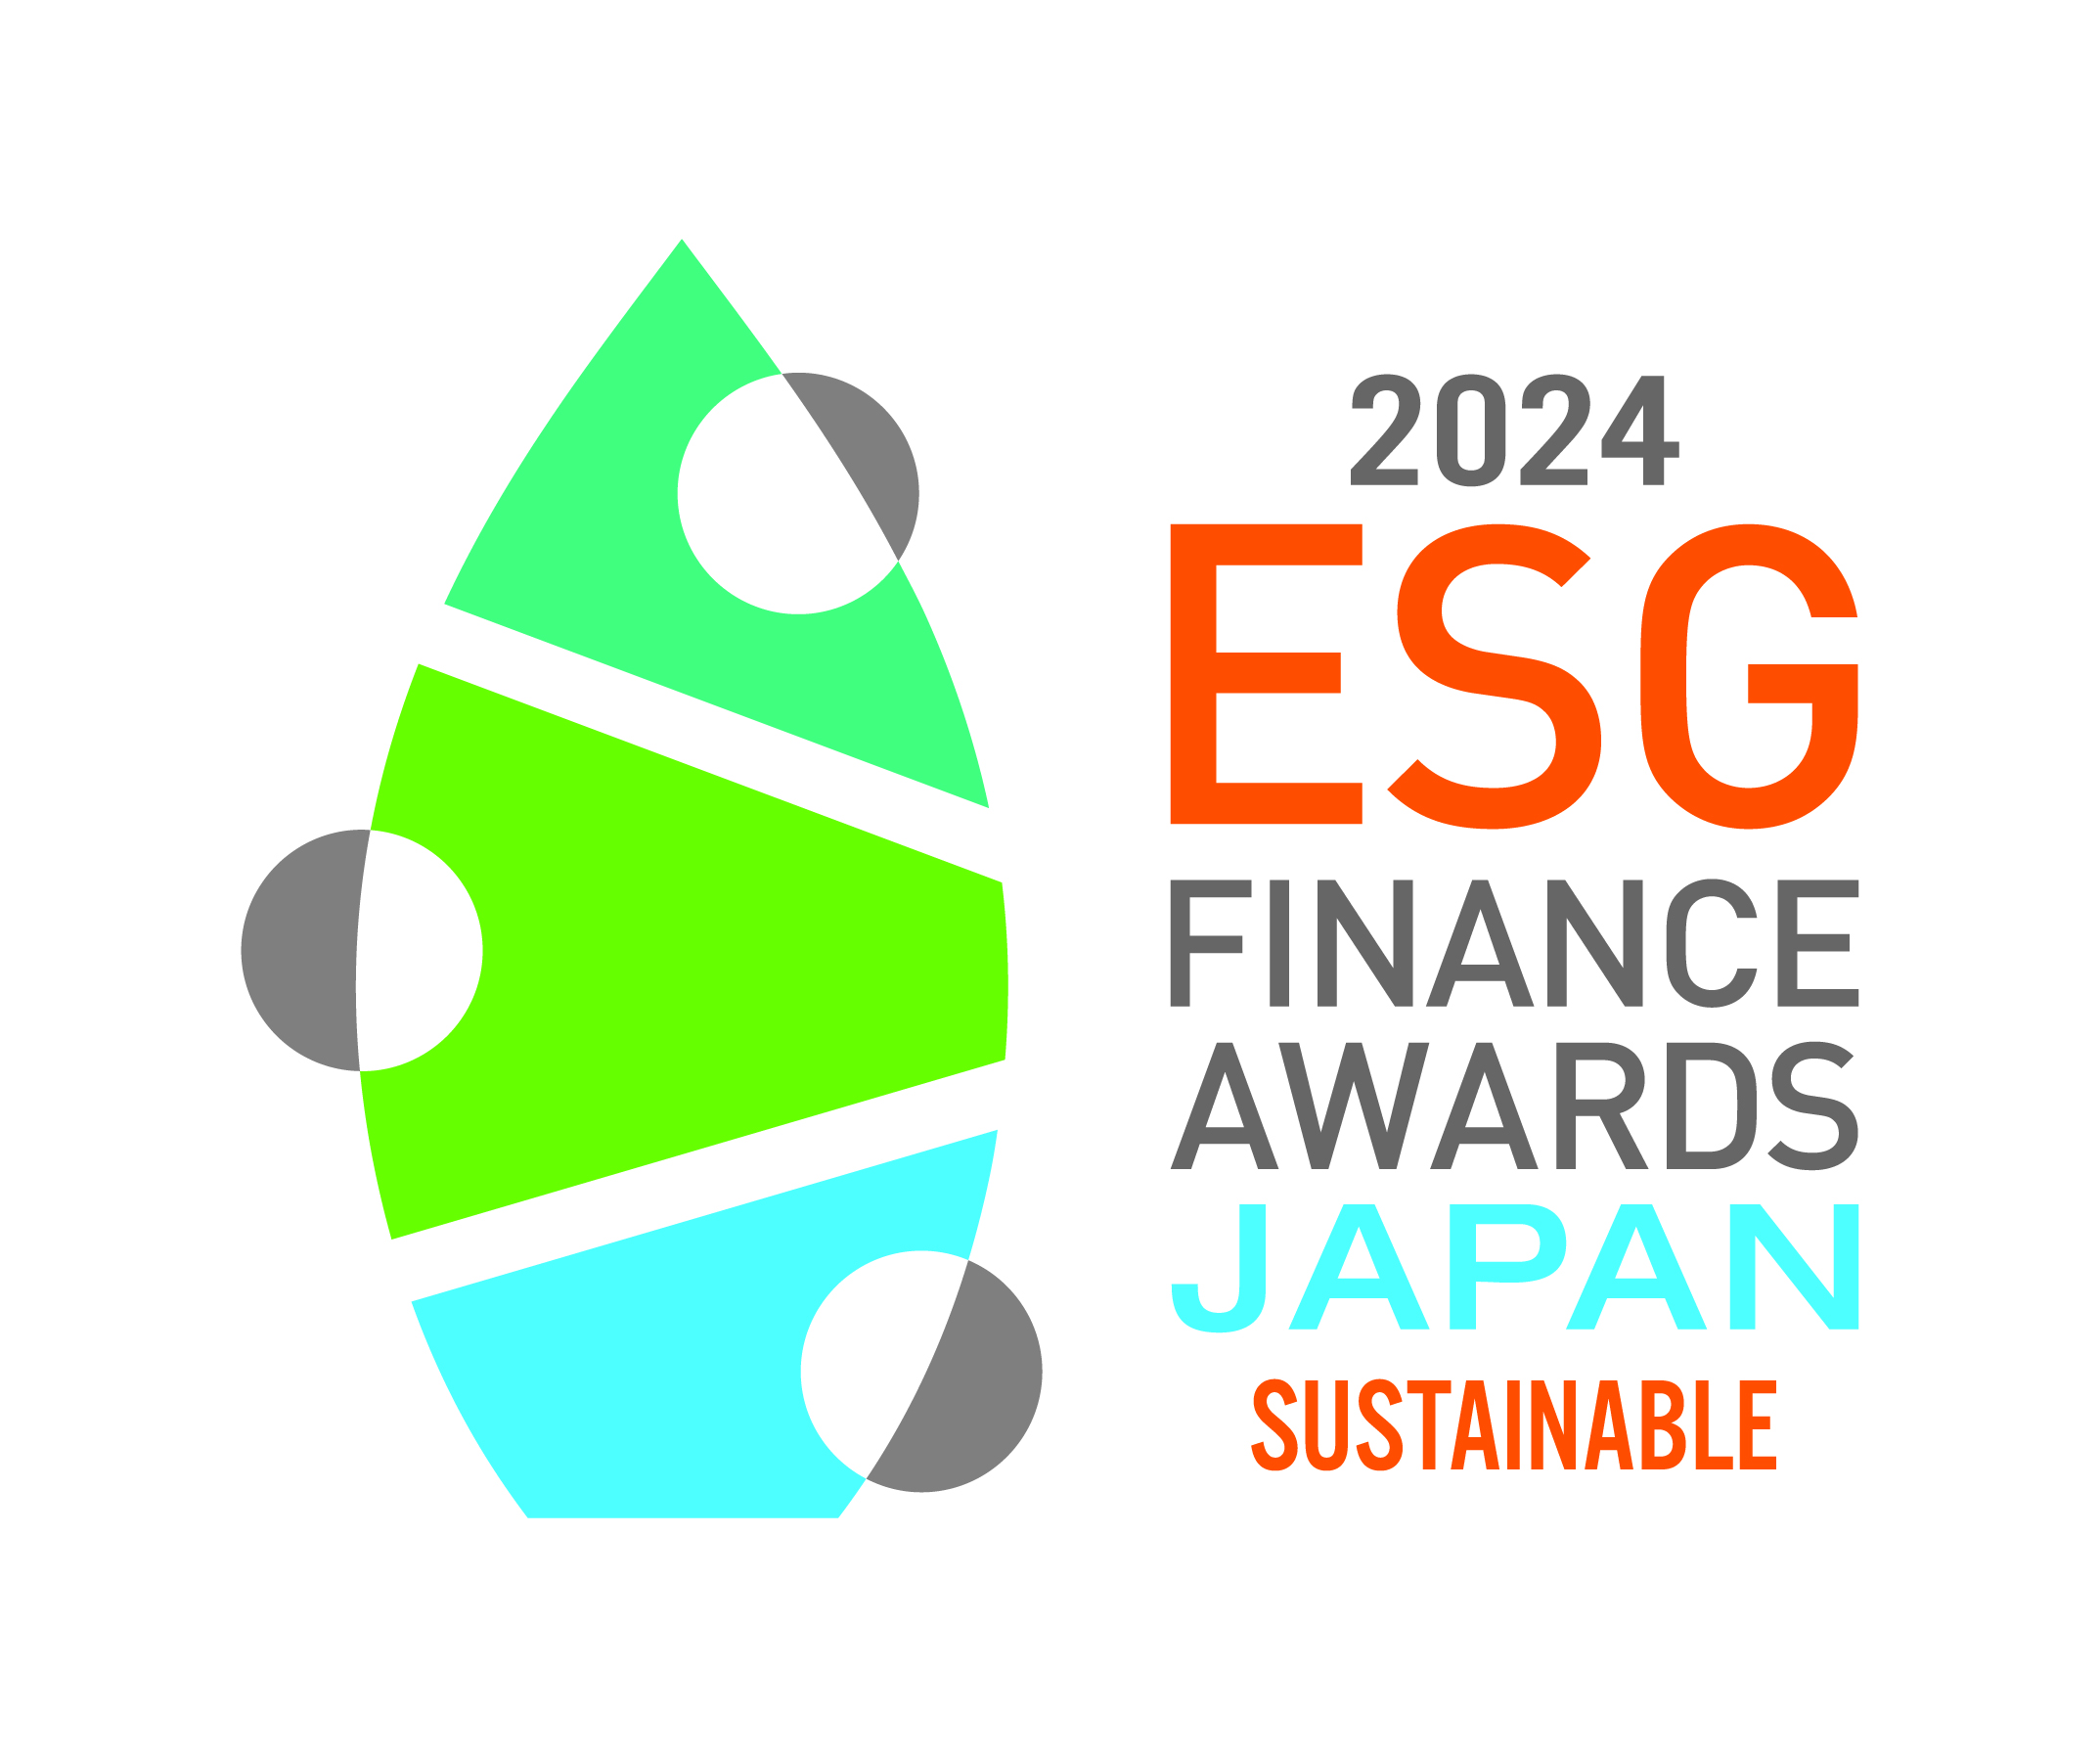 logo of 2022 ESG Finance Awards Japan Special